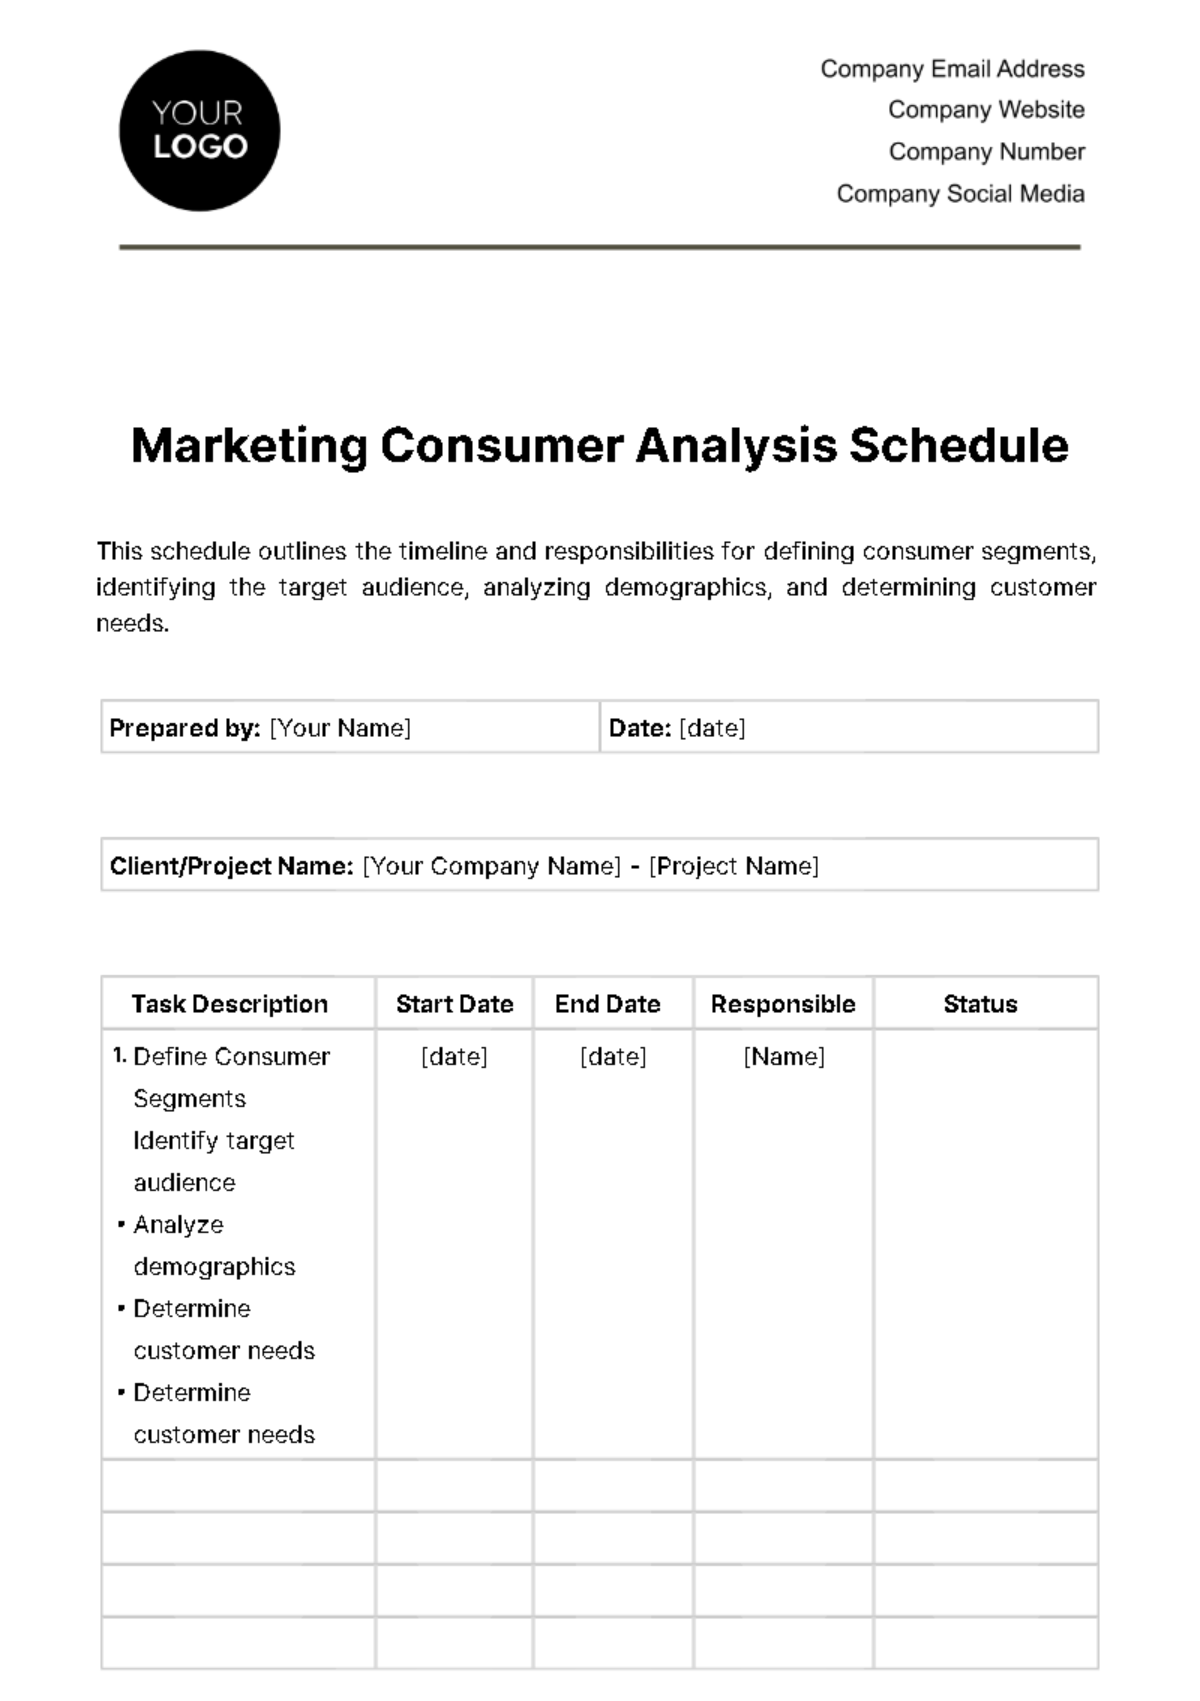 Marketing Consumer Analysis Schedule Template